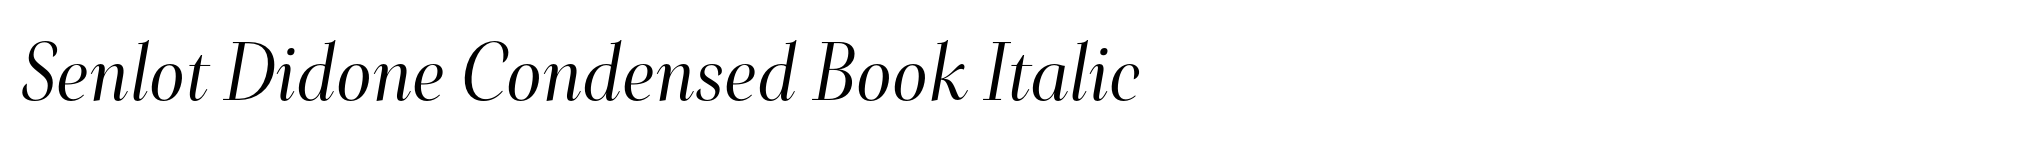 Senlot Didone Condensed Book Italic image